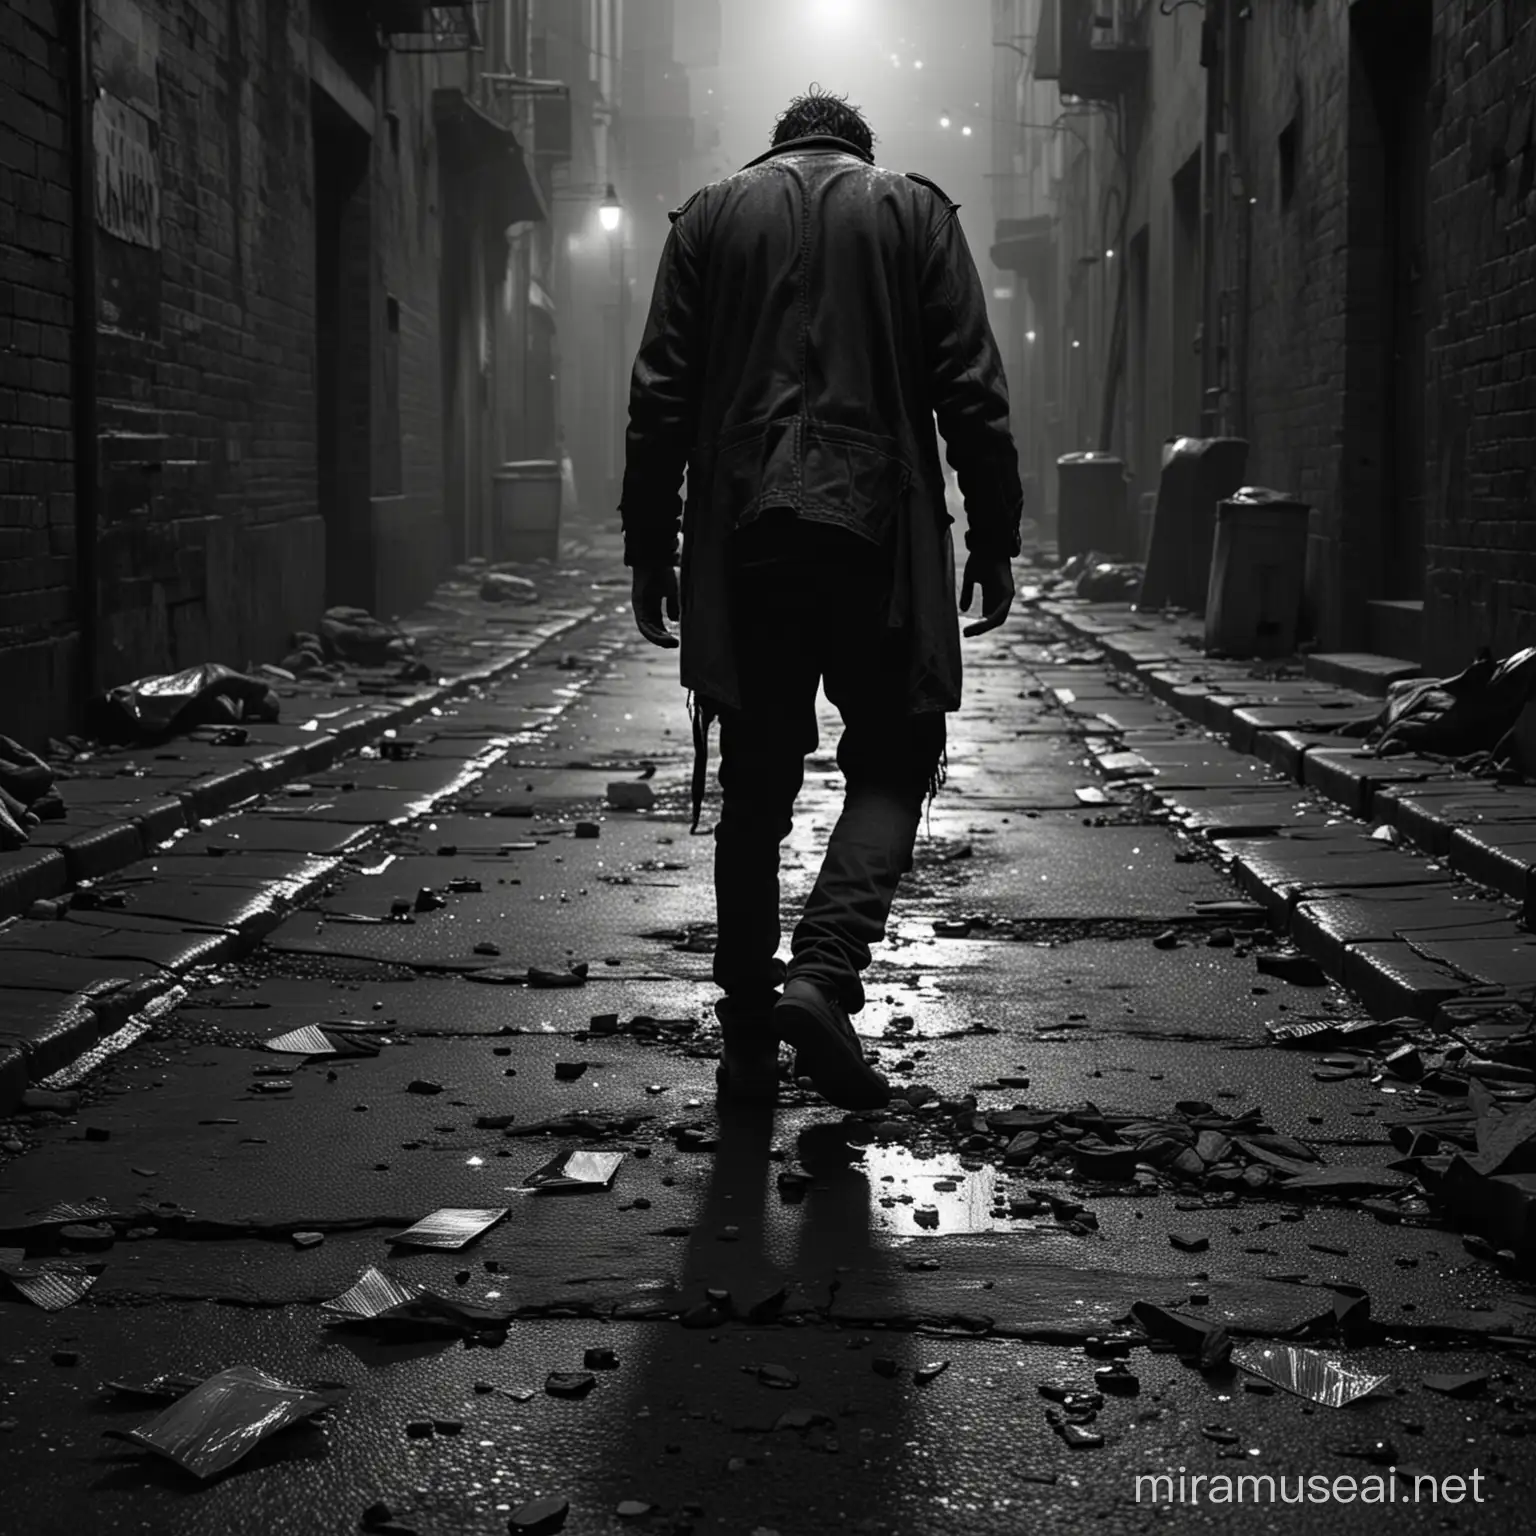 Desperate Man Stumbling in Dark Alley with Broken Road and Debris